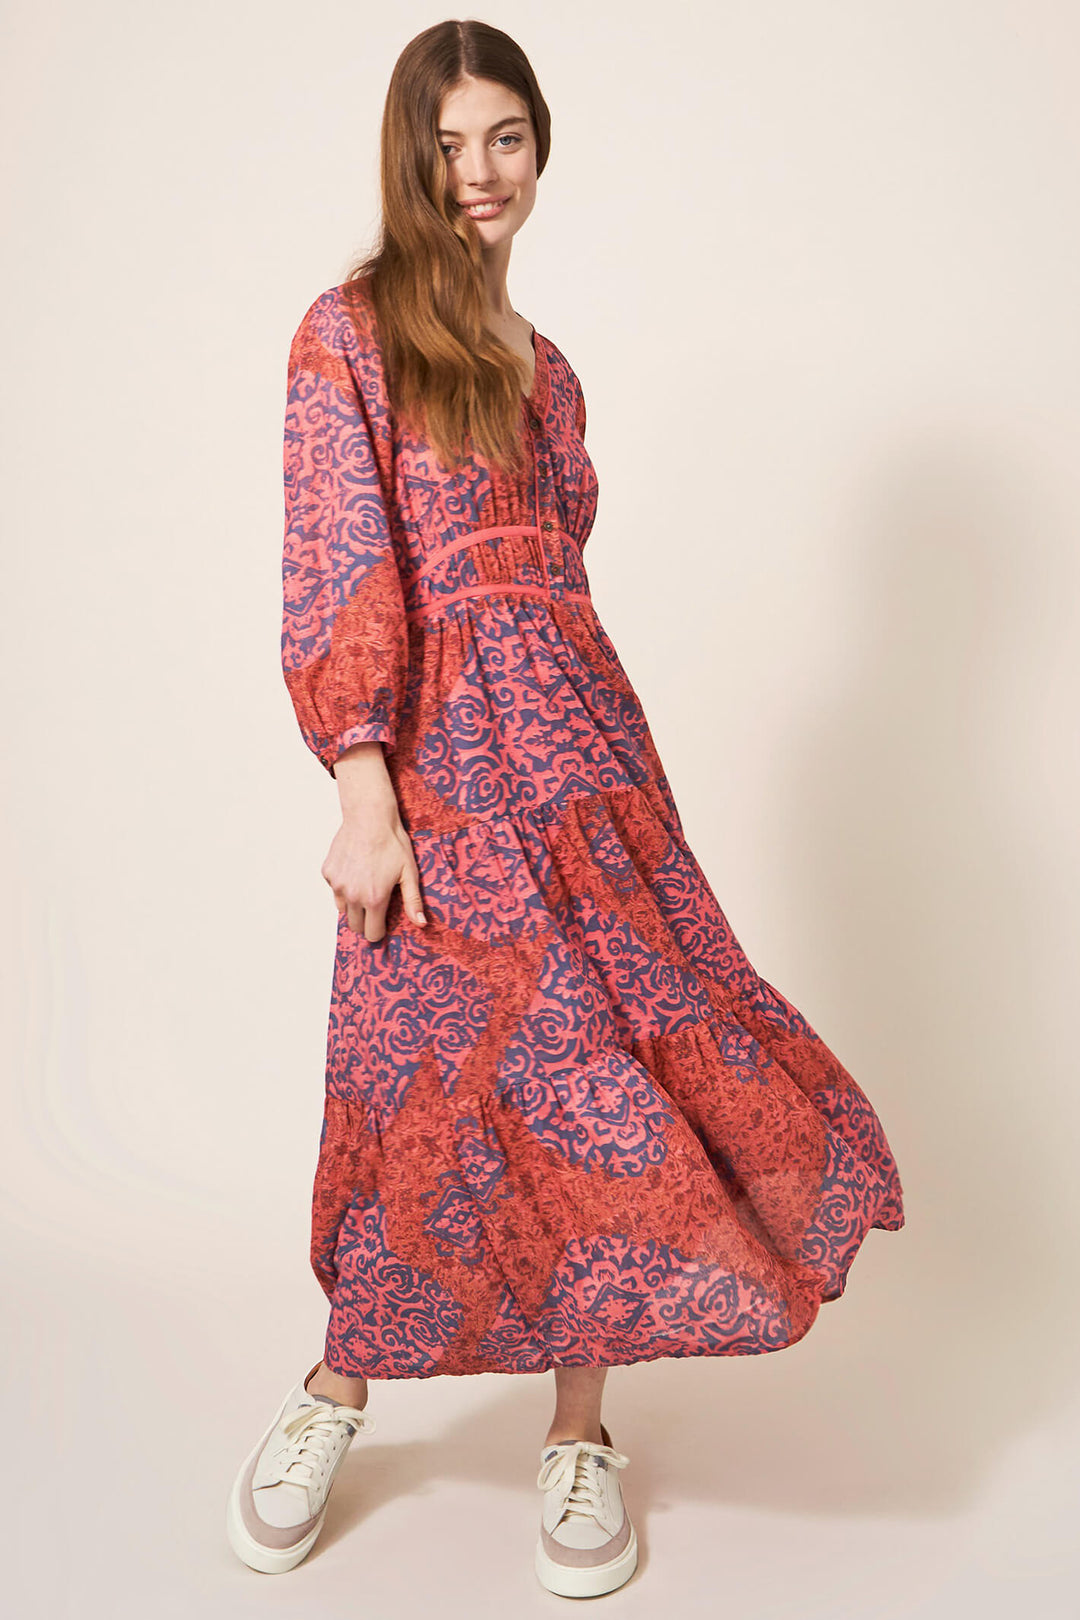 White Stuff 439505 Jenna Red Multi Print Midi Dress - Shirley Allum Boutique